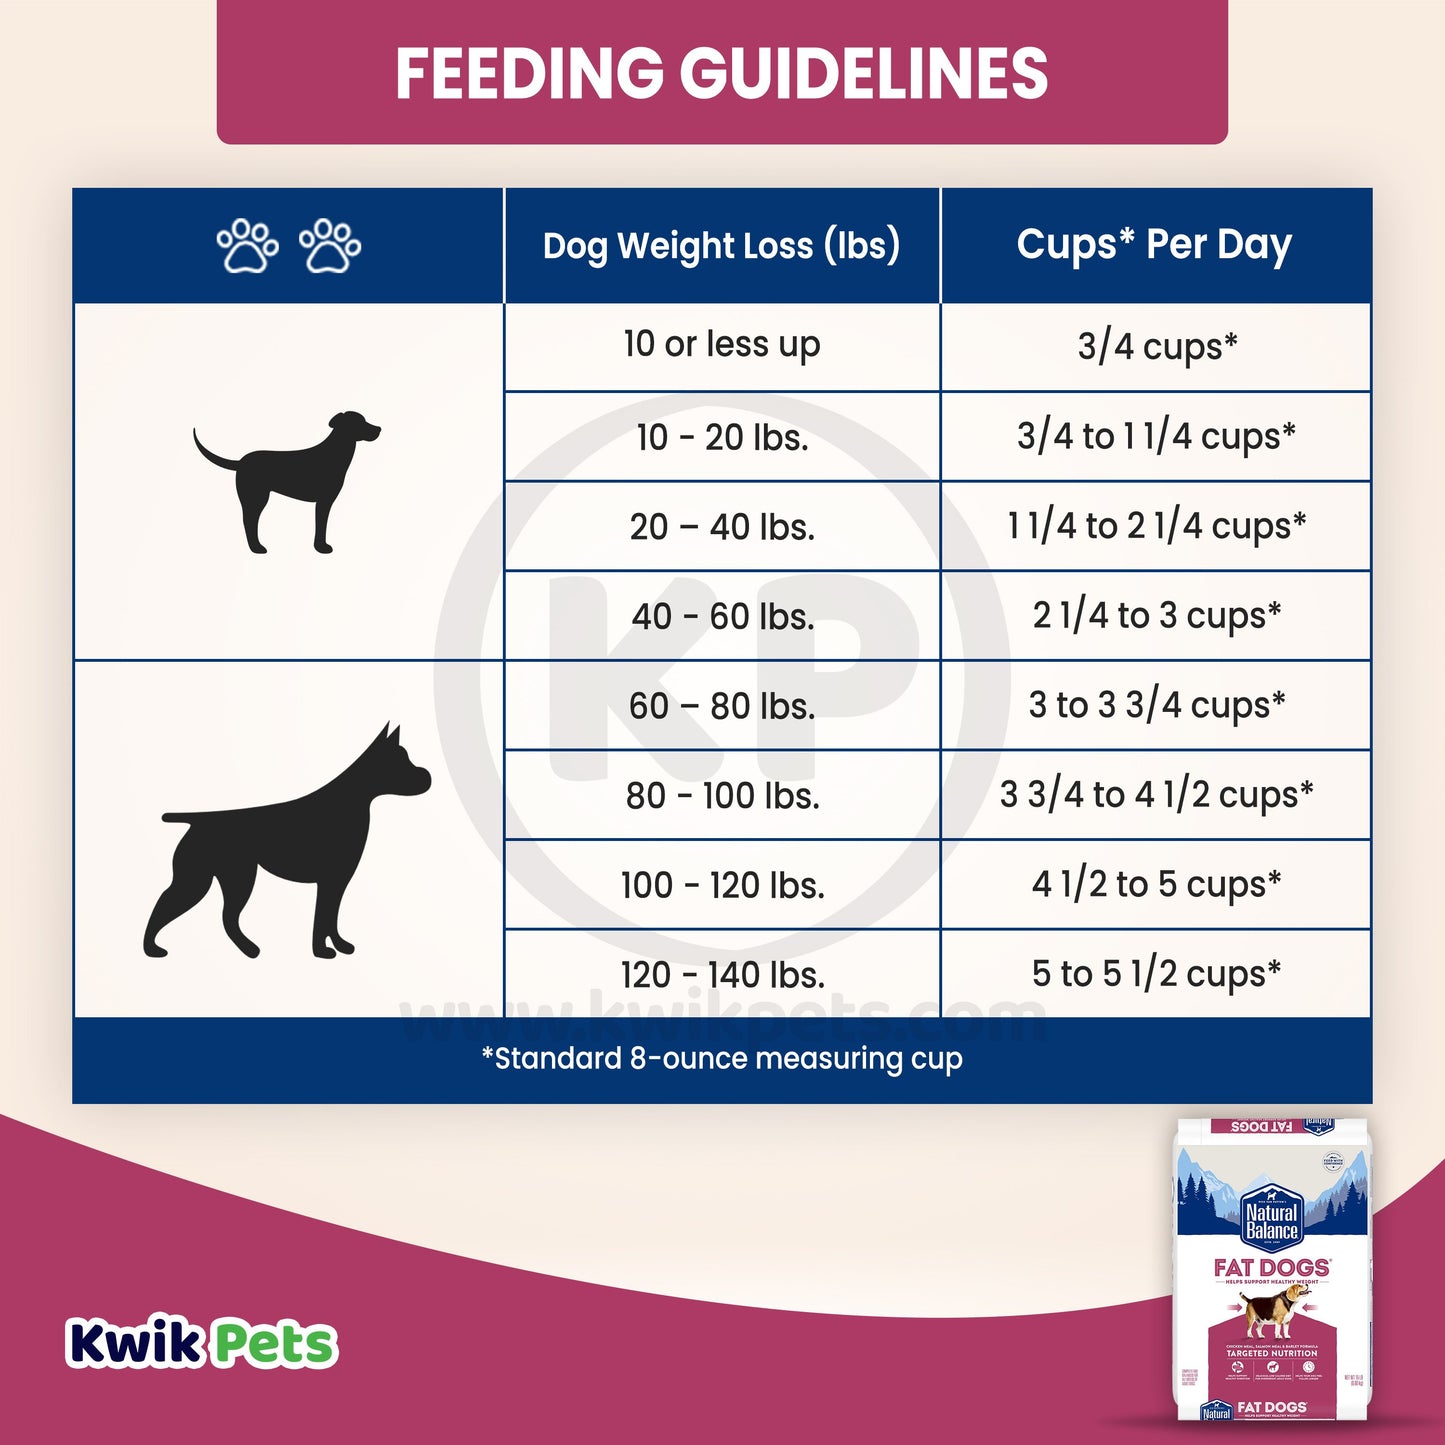 Natural Balance Pet Foods Fat Dogs Low Calorie Dry Dog Food Chicken & Salmon 15 lb, Natural Balance